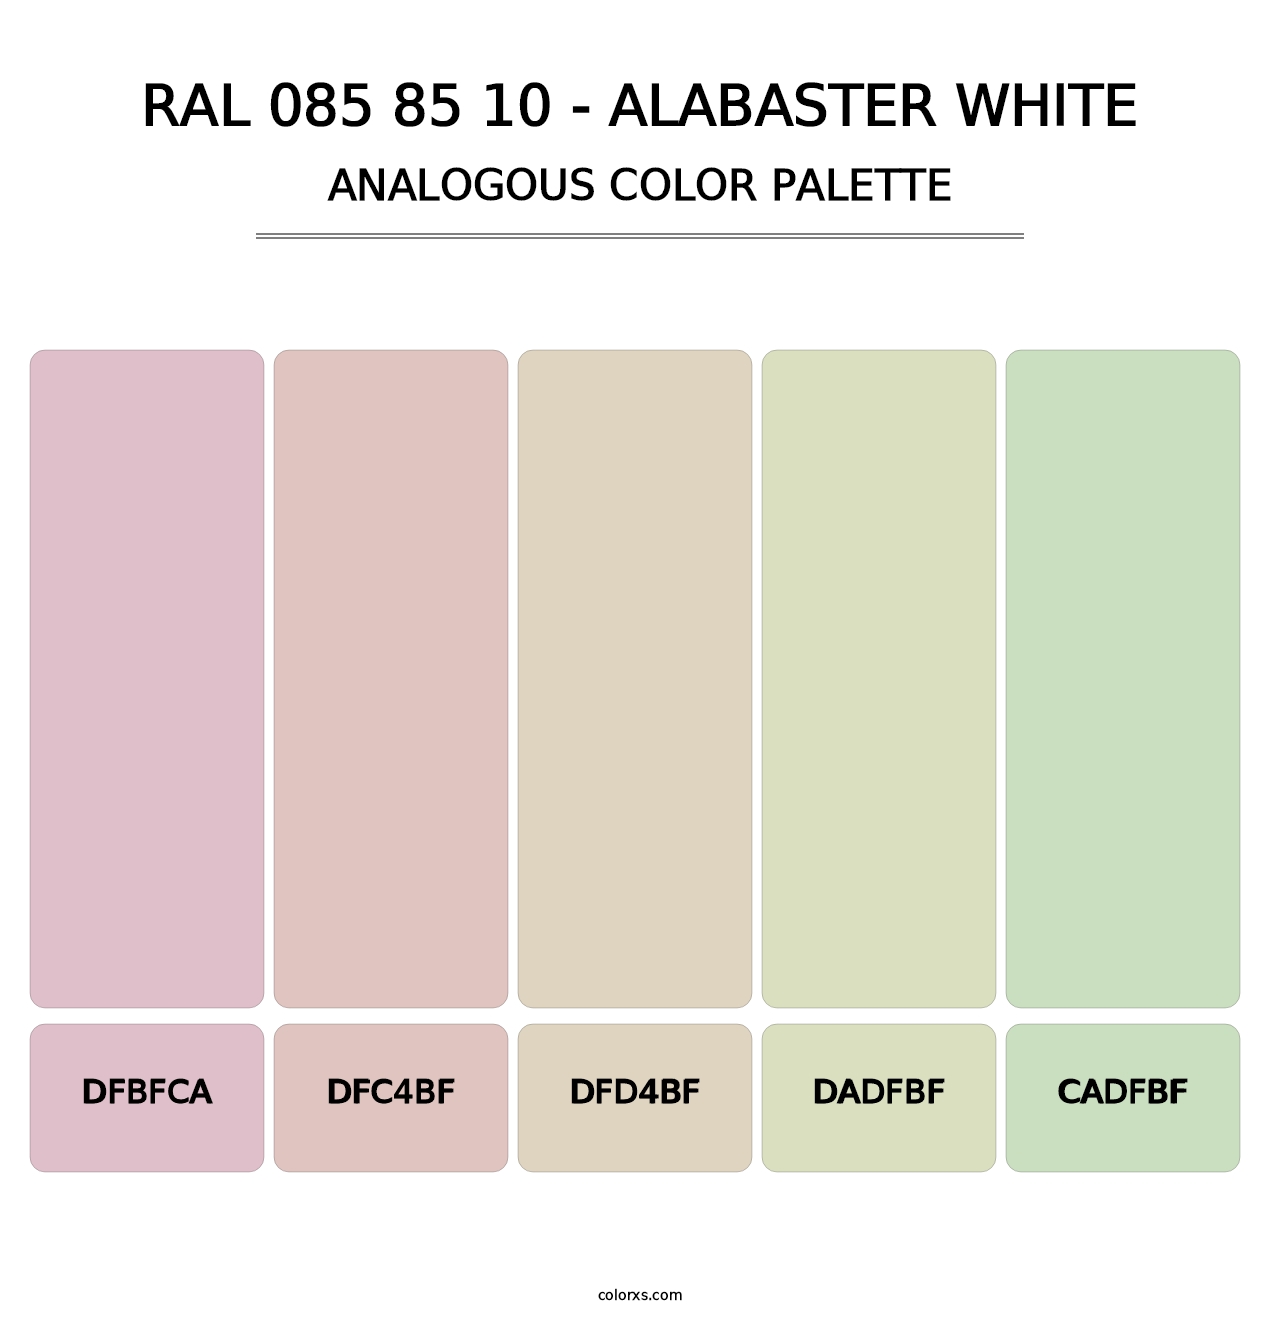 RAL 085 85 10 - Alabaster White - Analogous Color Palette